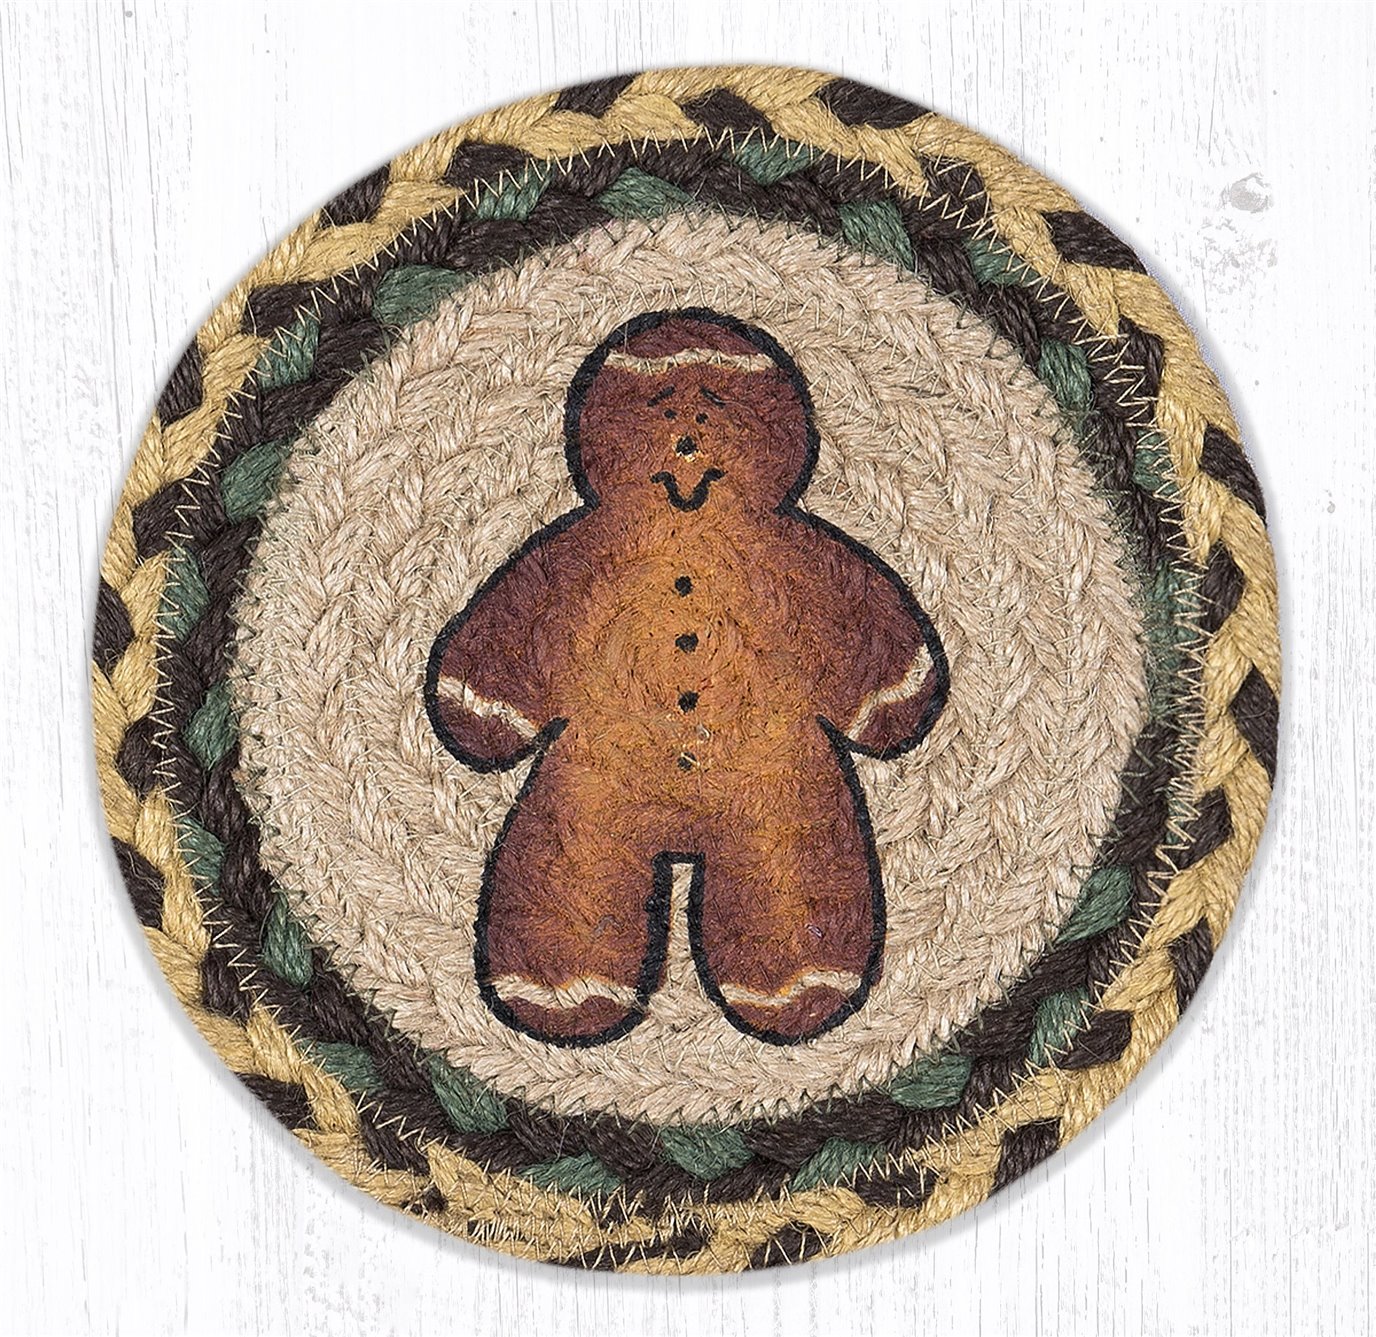 Gingerbread Man Round Large Braided Coaster 7"x7" Set of 4